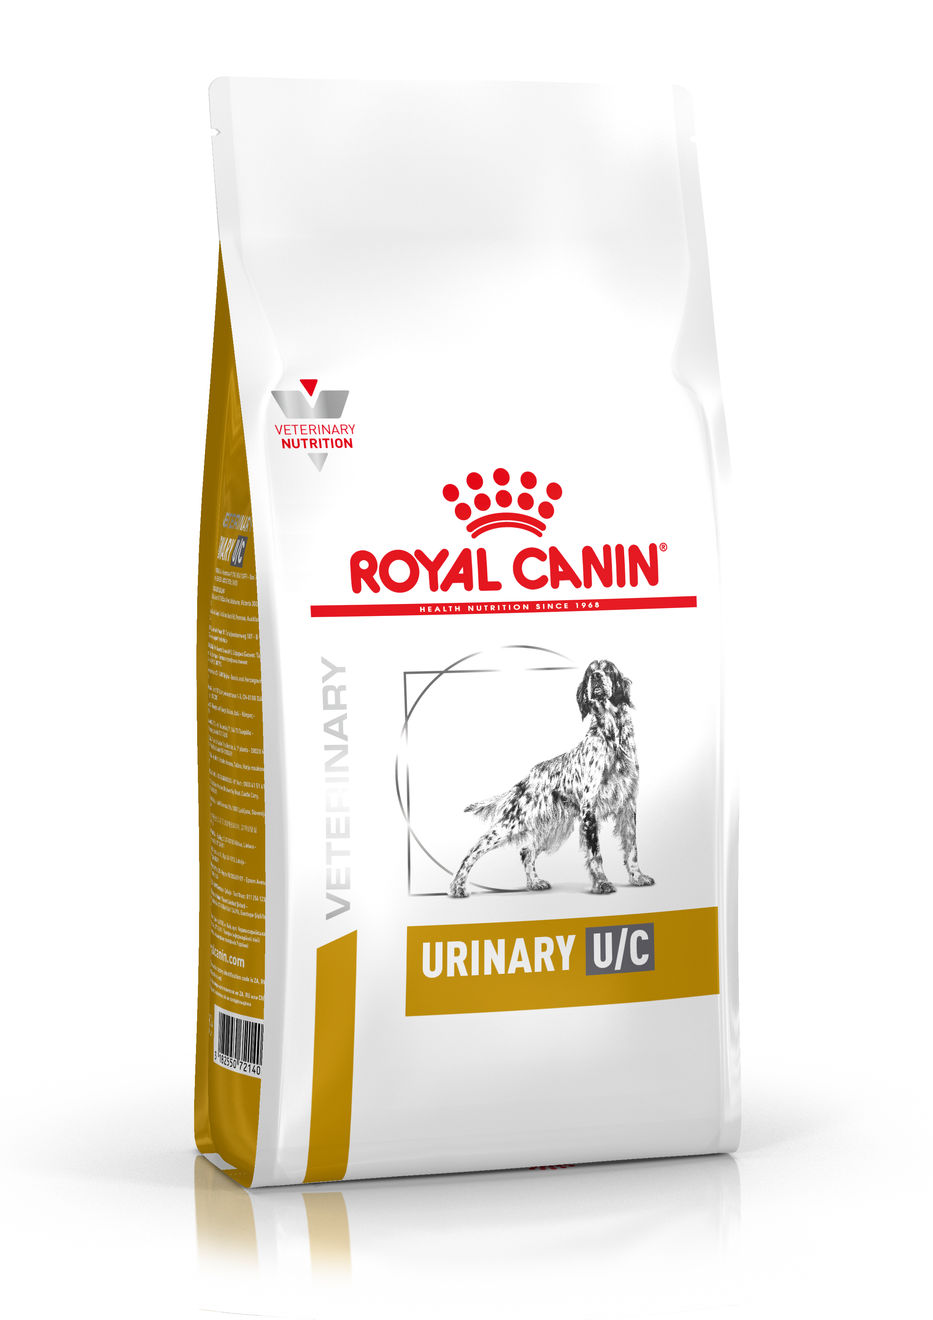 Royal Canin U/C low purine 1 x 2 kg